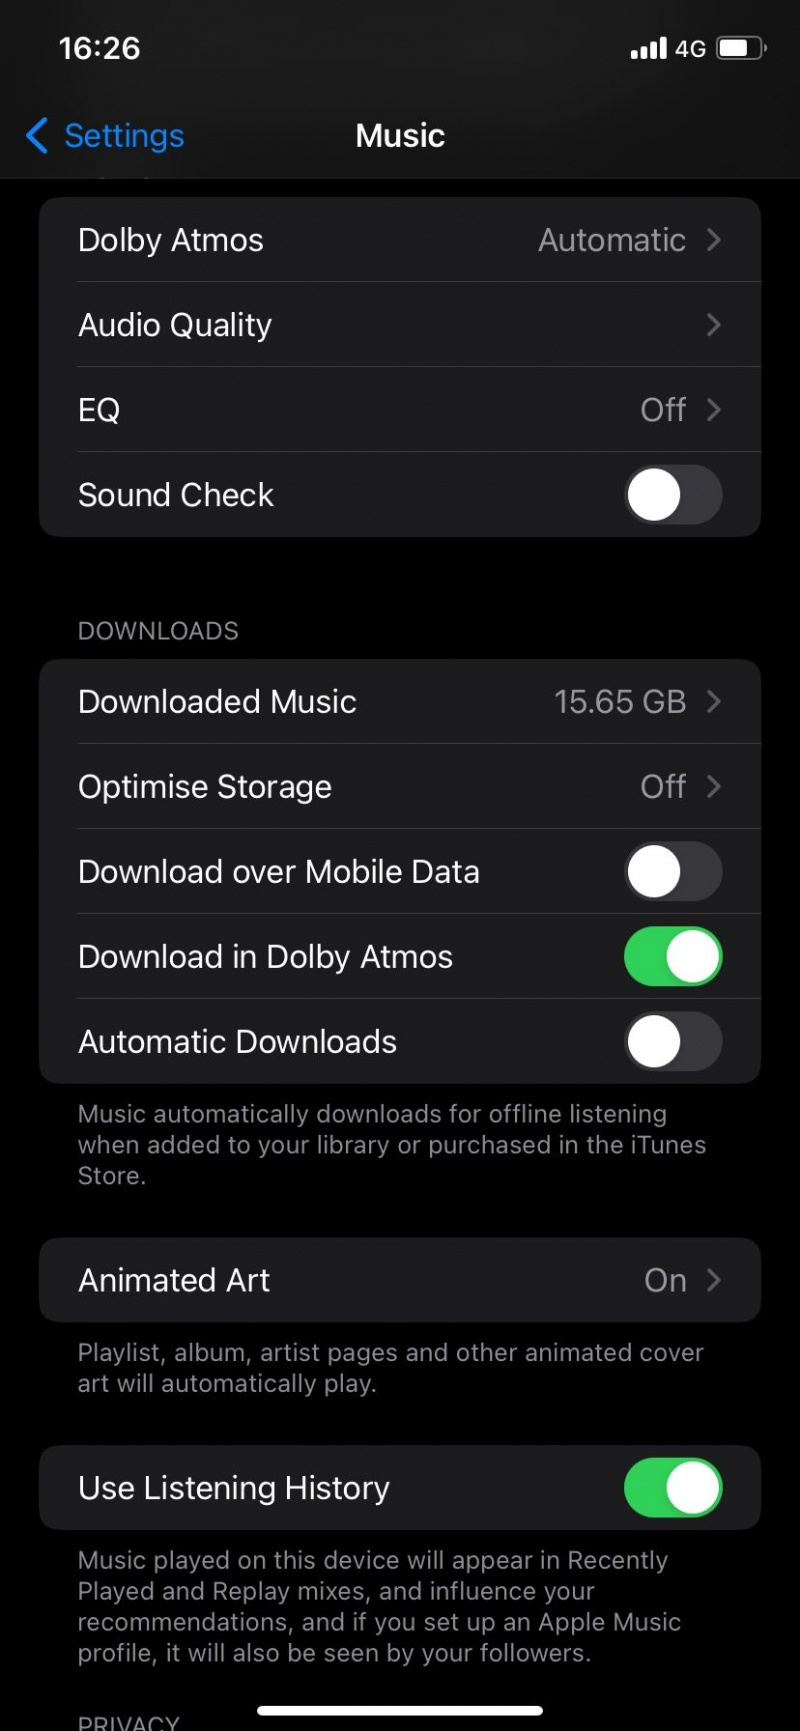   Download por dados móveis desativados no Apple Music